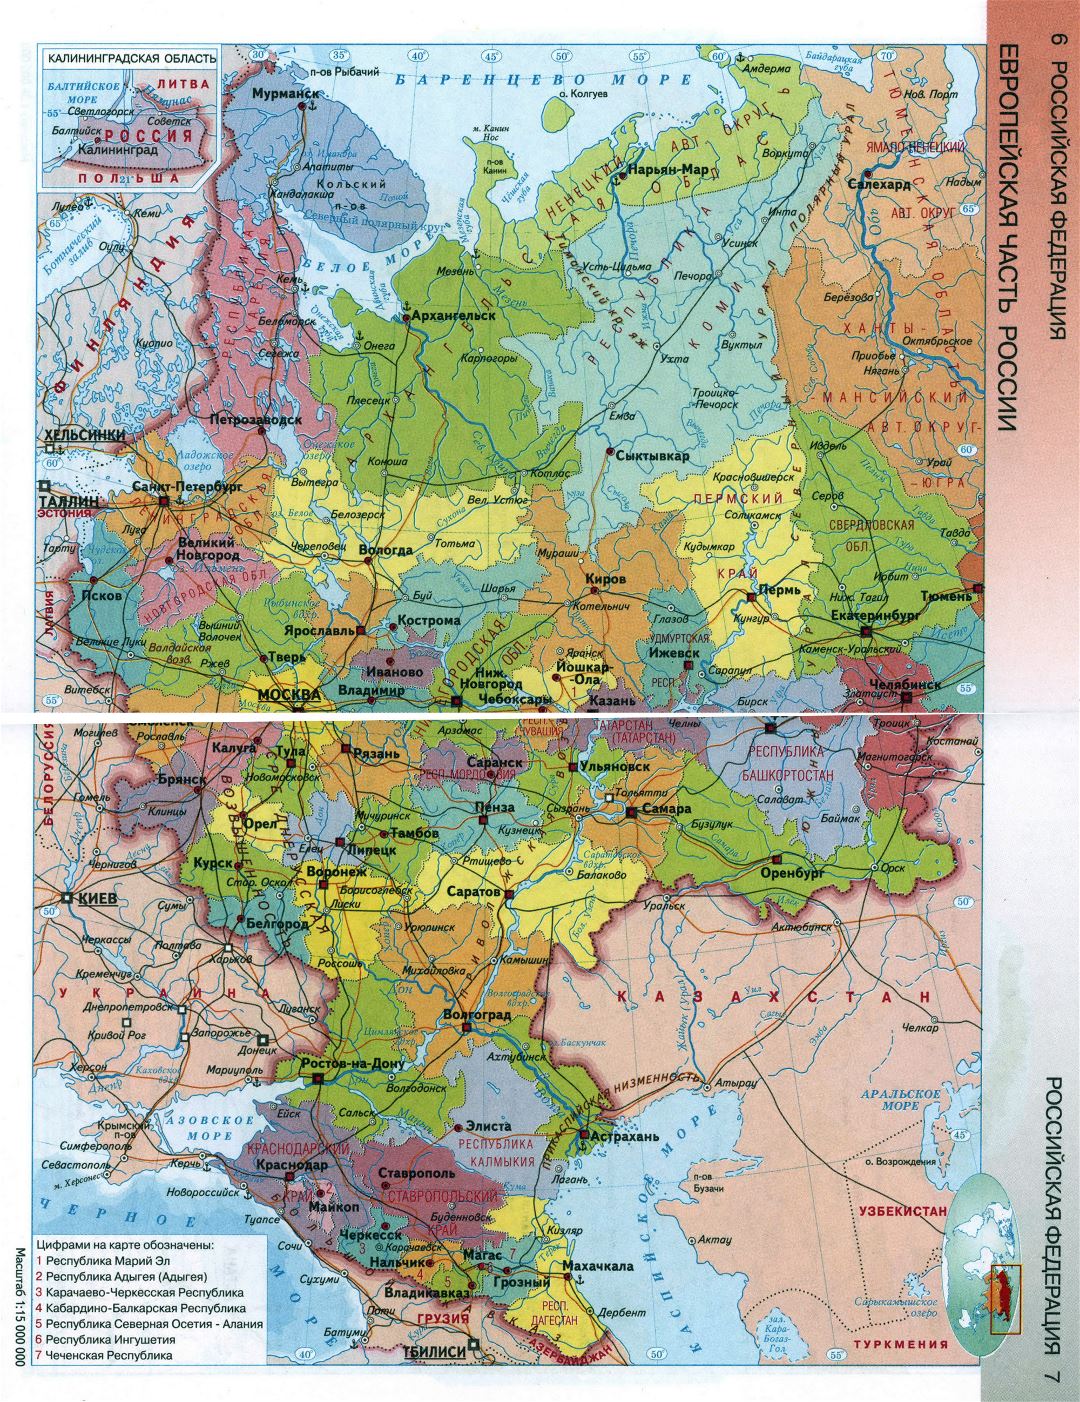 Grande detallado mapa de parte europea de Federación de Rusia en ruso